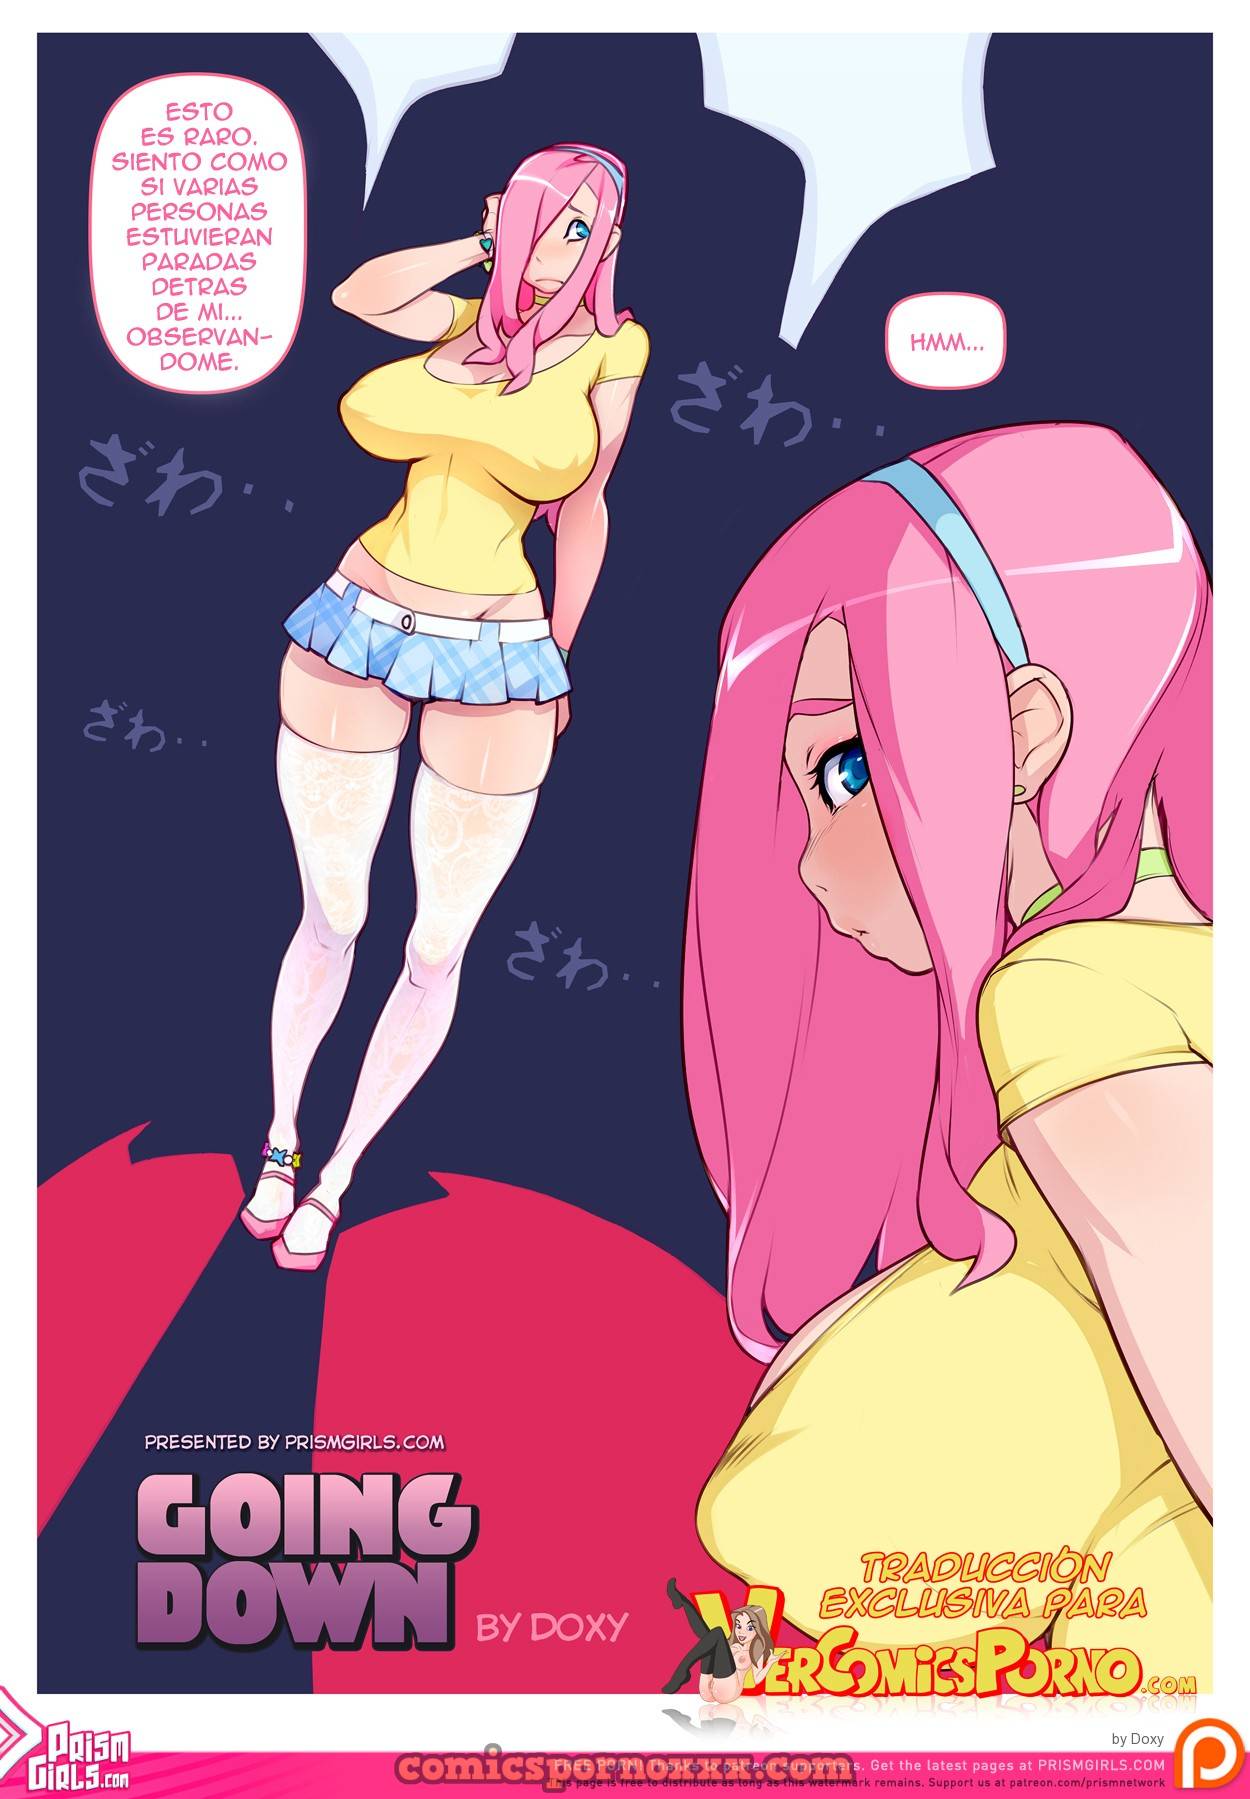 Going Down (My Little Pony Friendship) - 1 - Comics Porno - Hentai Manga - Cartoon XXX